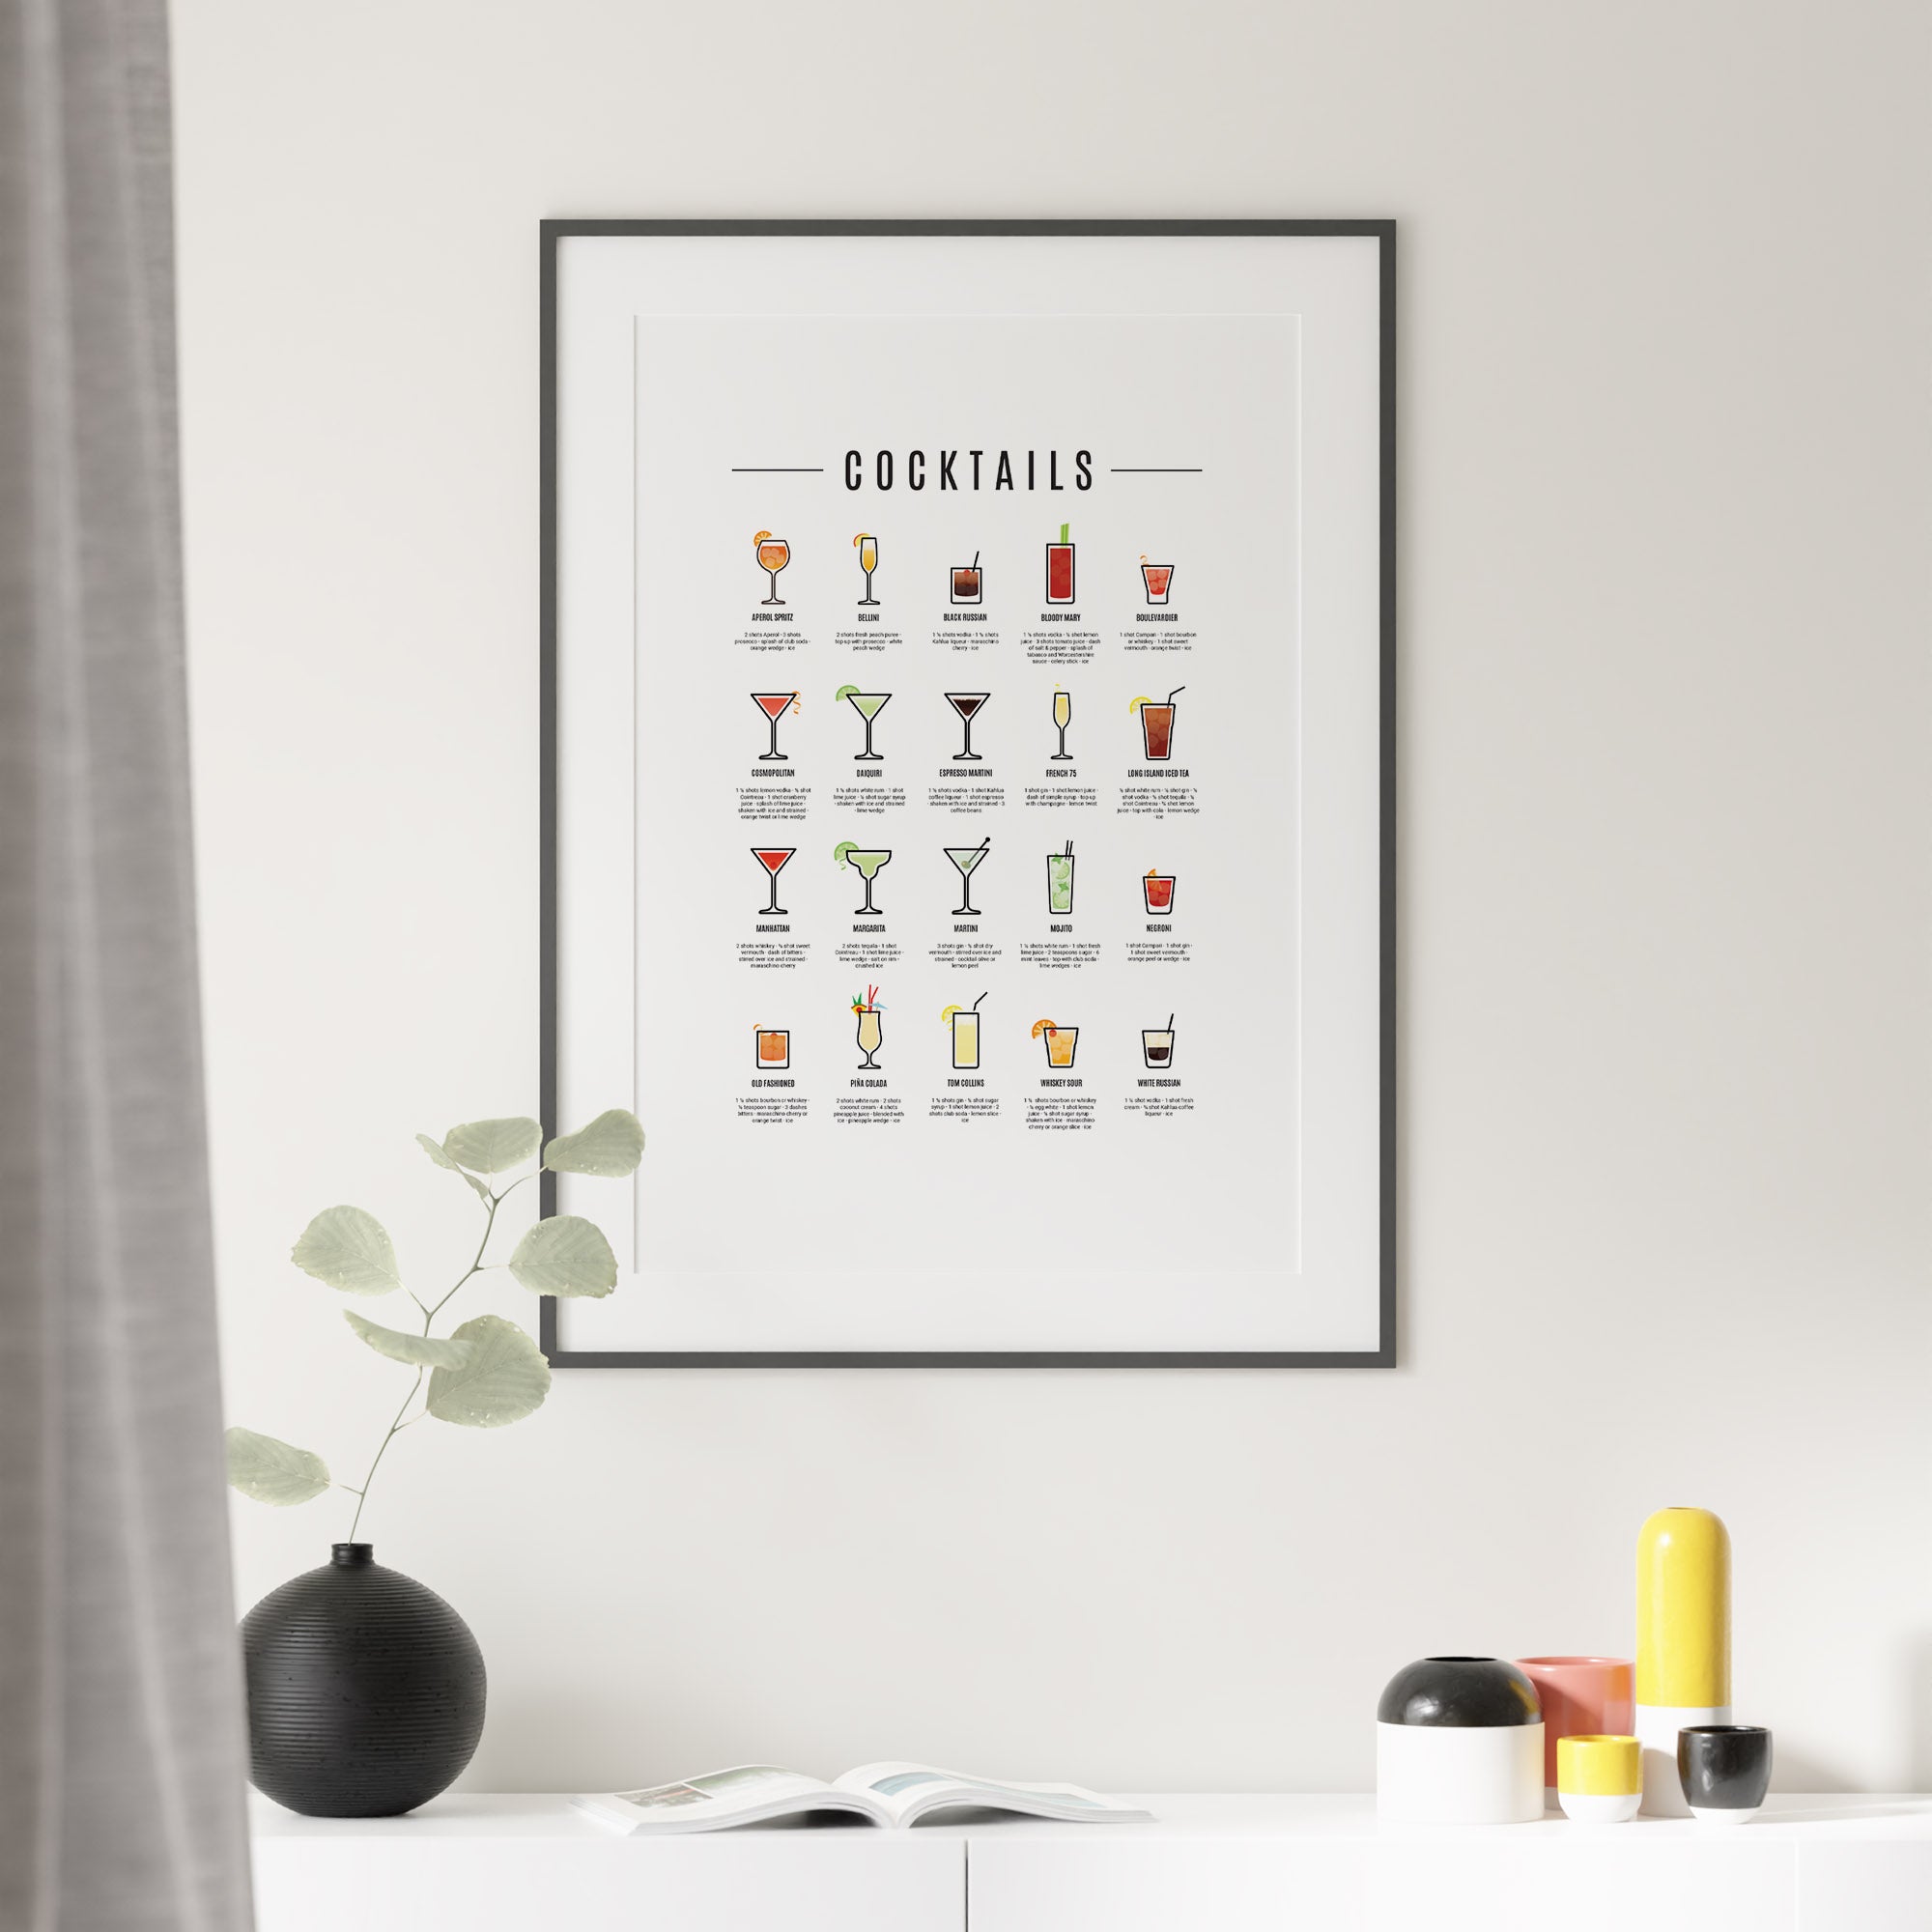 Bar cart wall art featuring a cocktail recipe guide poster